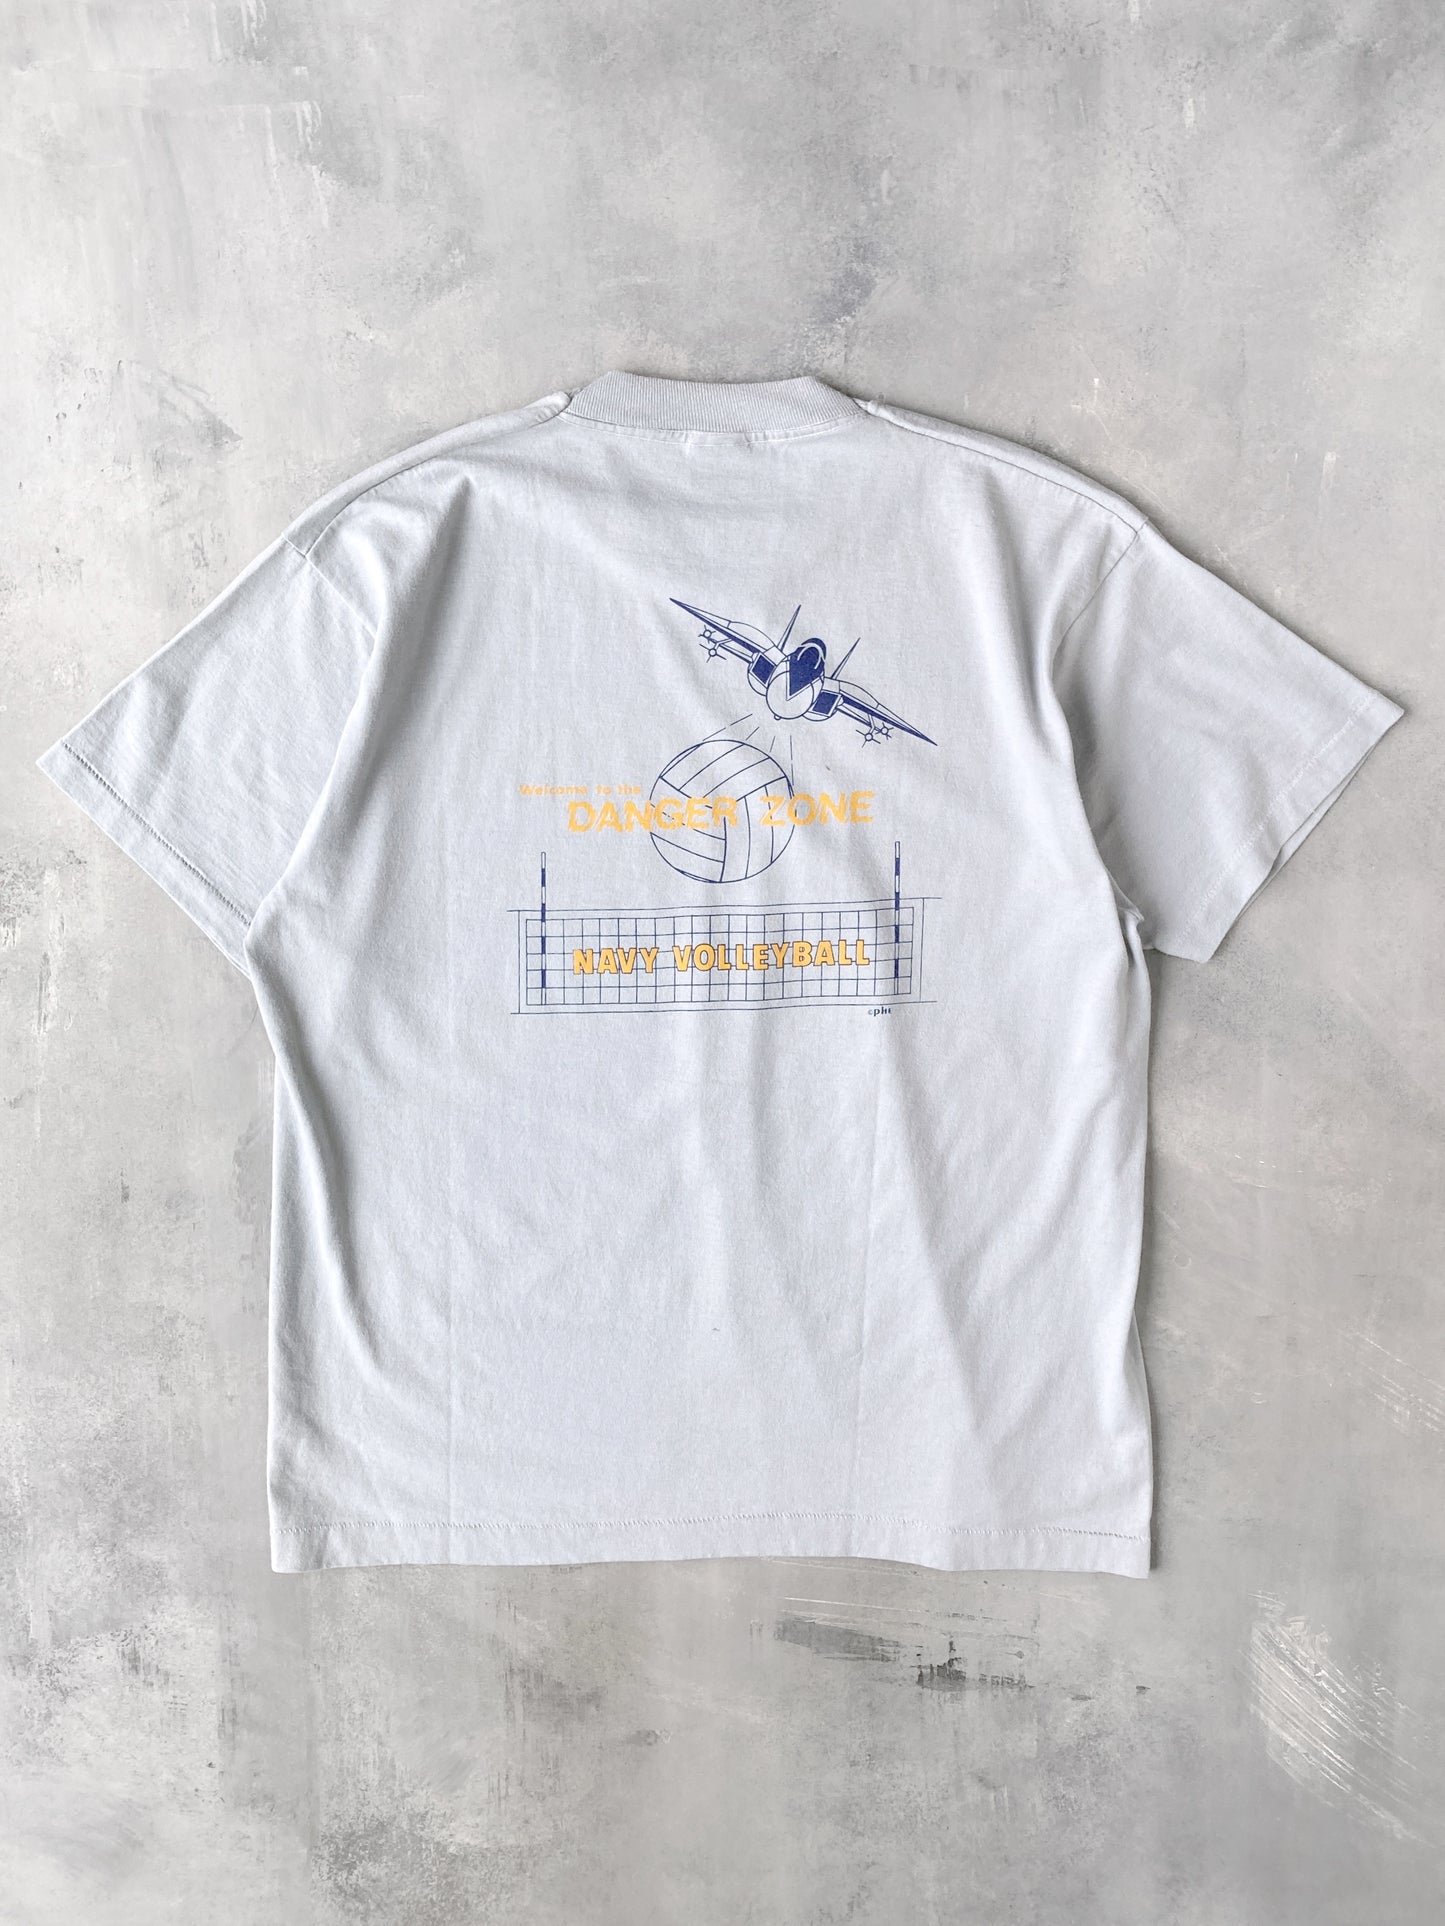 Navy Volleyball T-Shirt 90's - XL